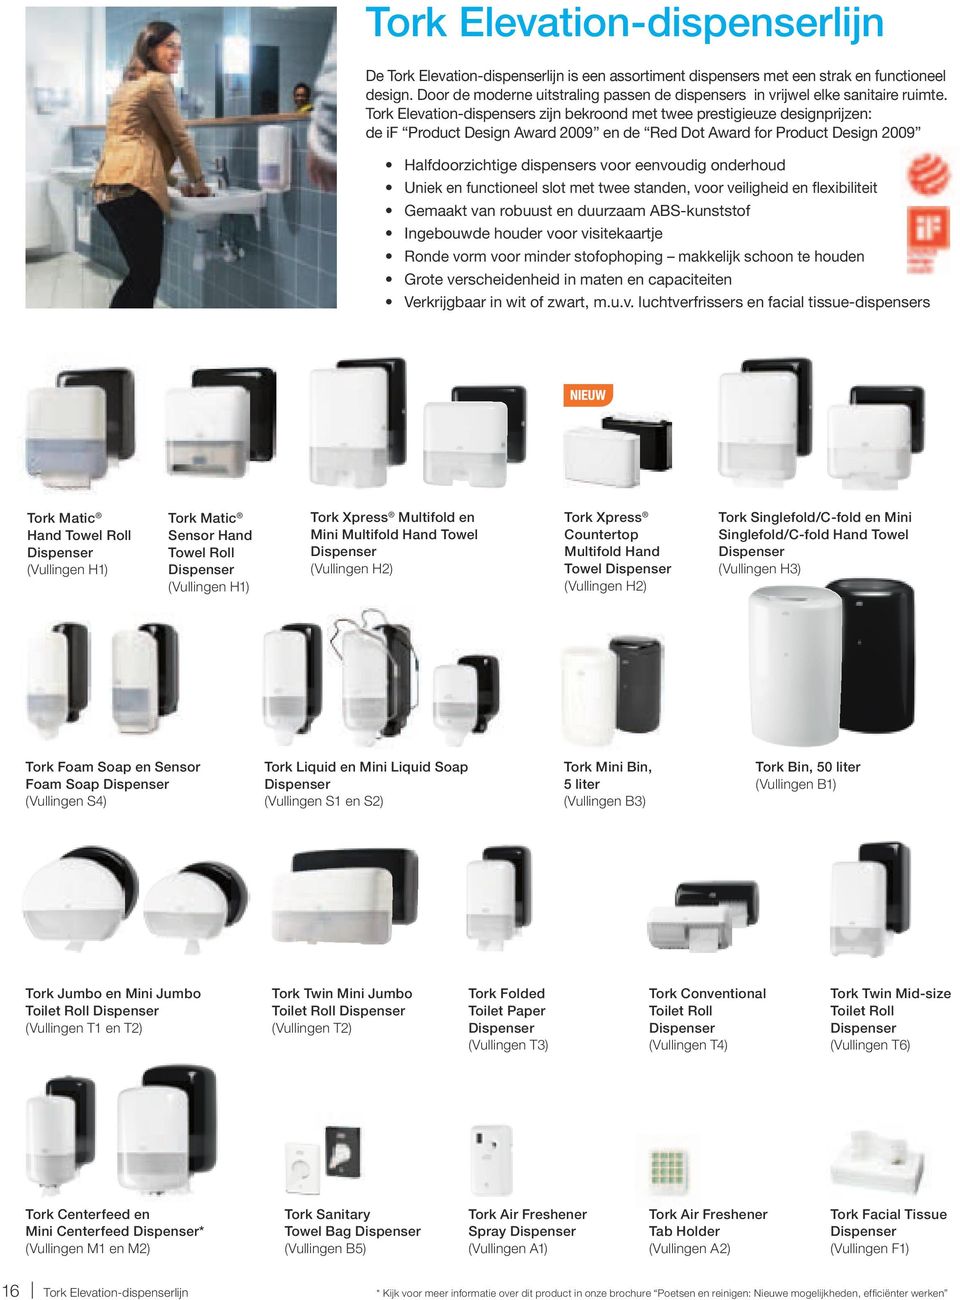 Matic Sensor Hand Towel Roll Dispenser (Vullingen H) Tork Foam Soap en Sensor Foam Soap Dispenser (Vullingen S4) Tork Jumbo en Mini Jumbo Toilet Roll Dispenser (Vullingen T en T) Tork Centerfeed en